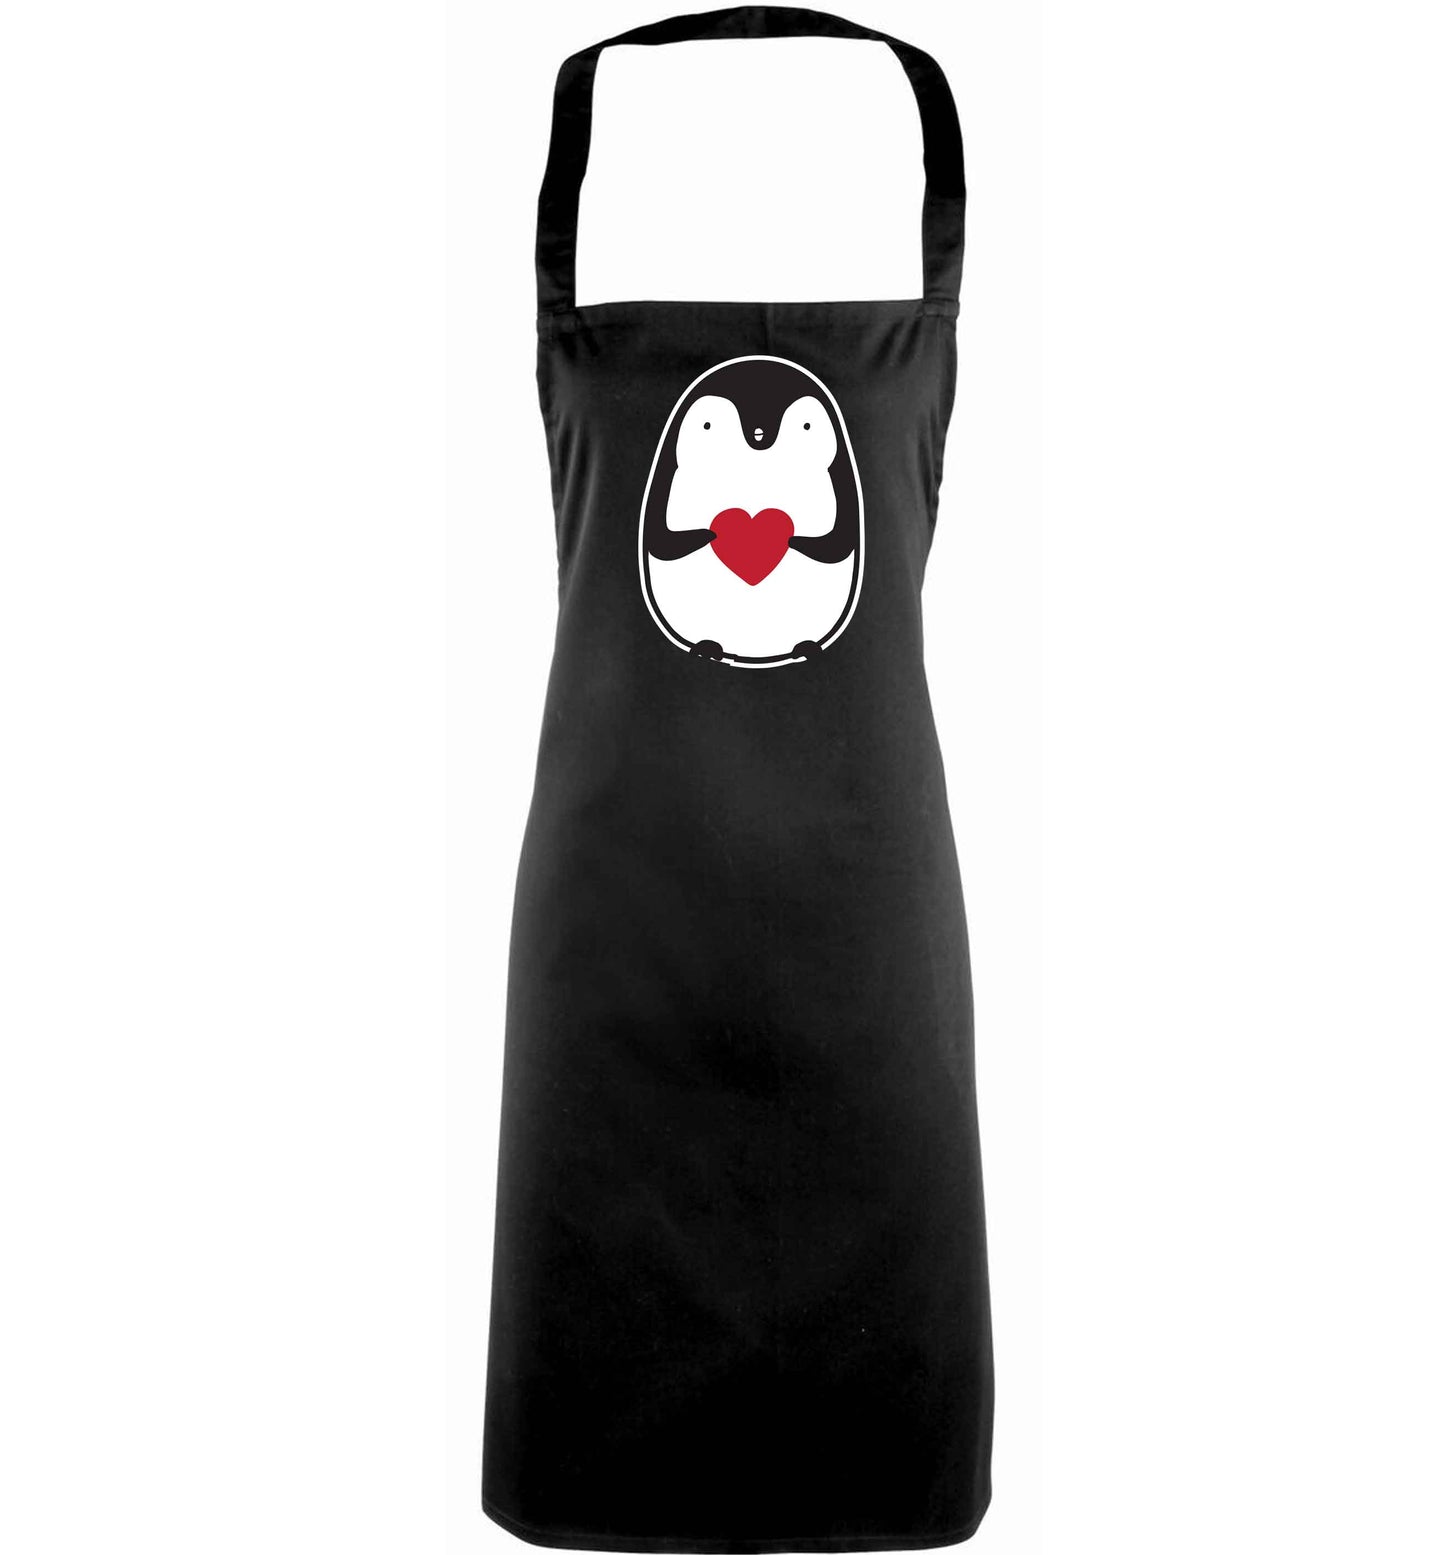 Cute penguin heart adults black apron